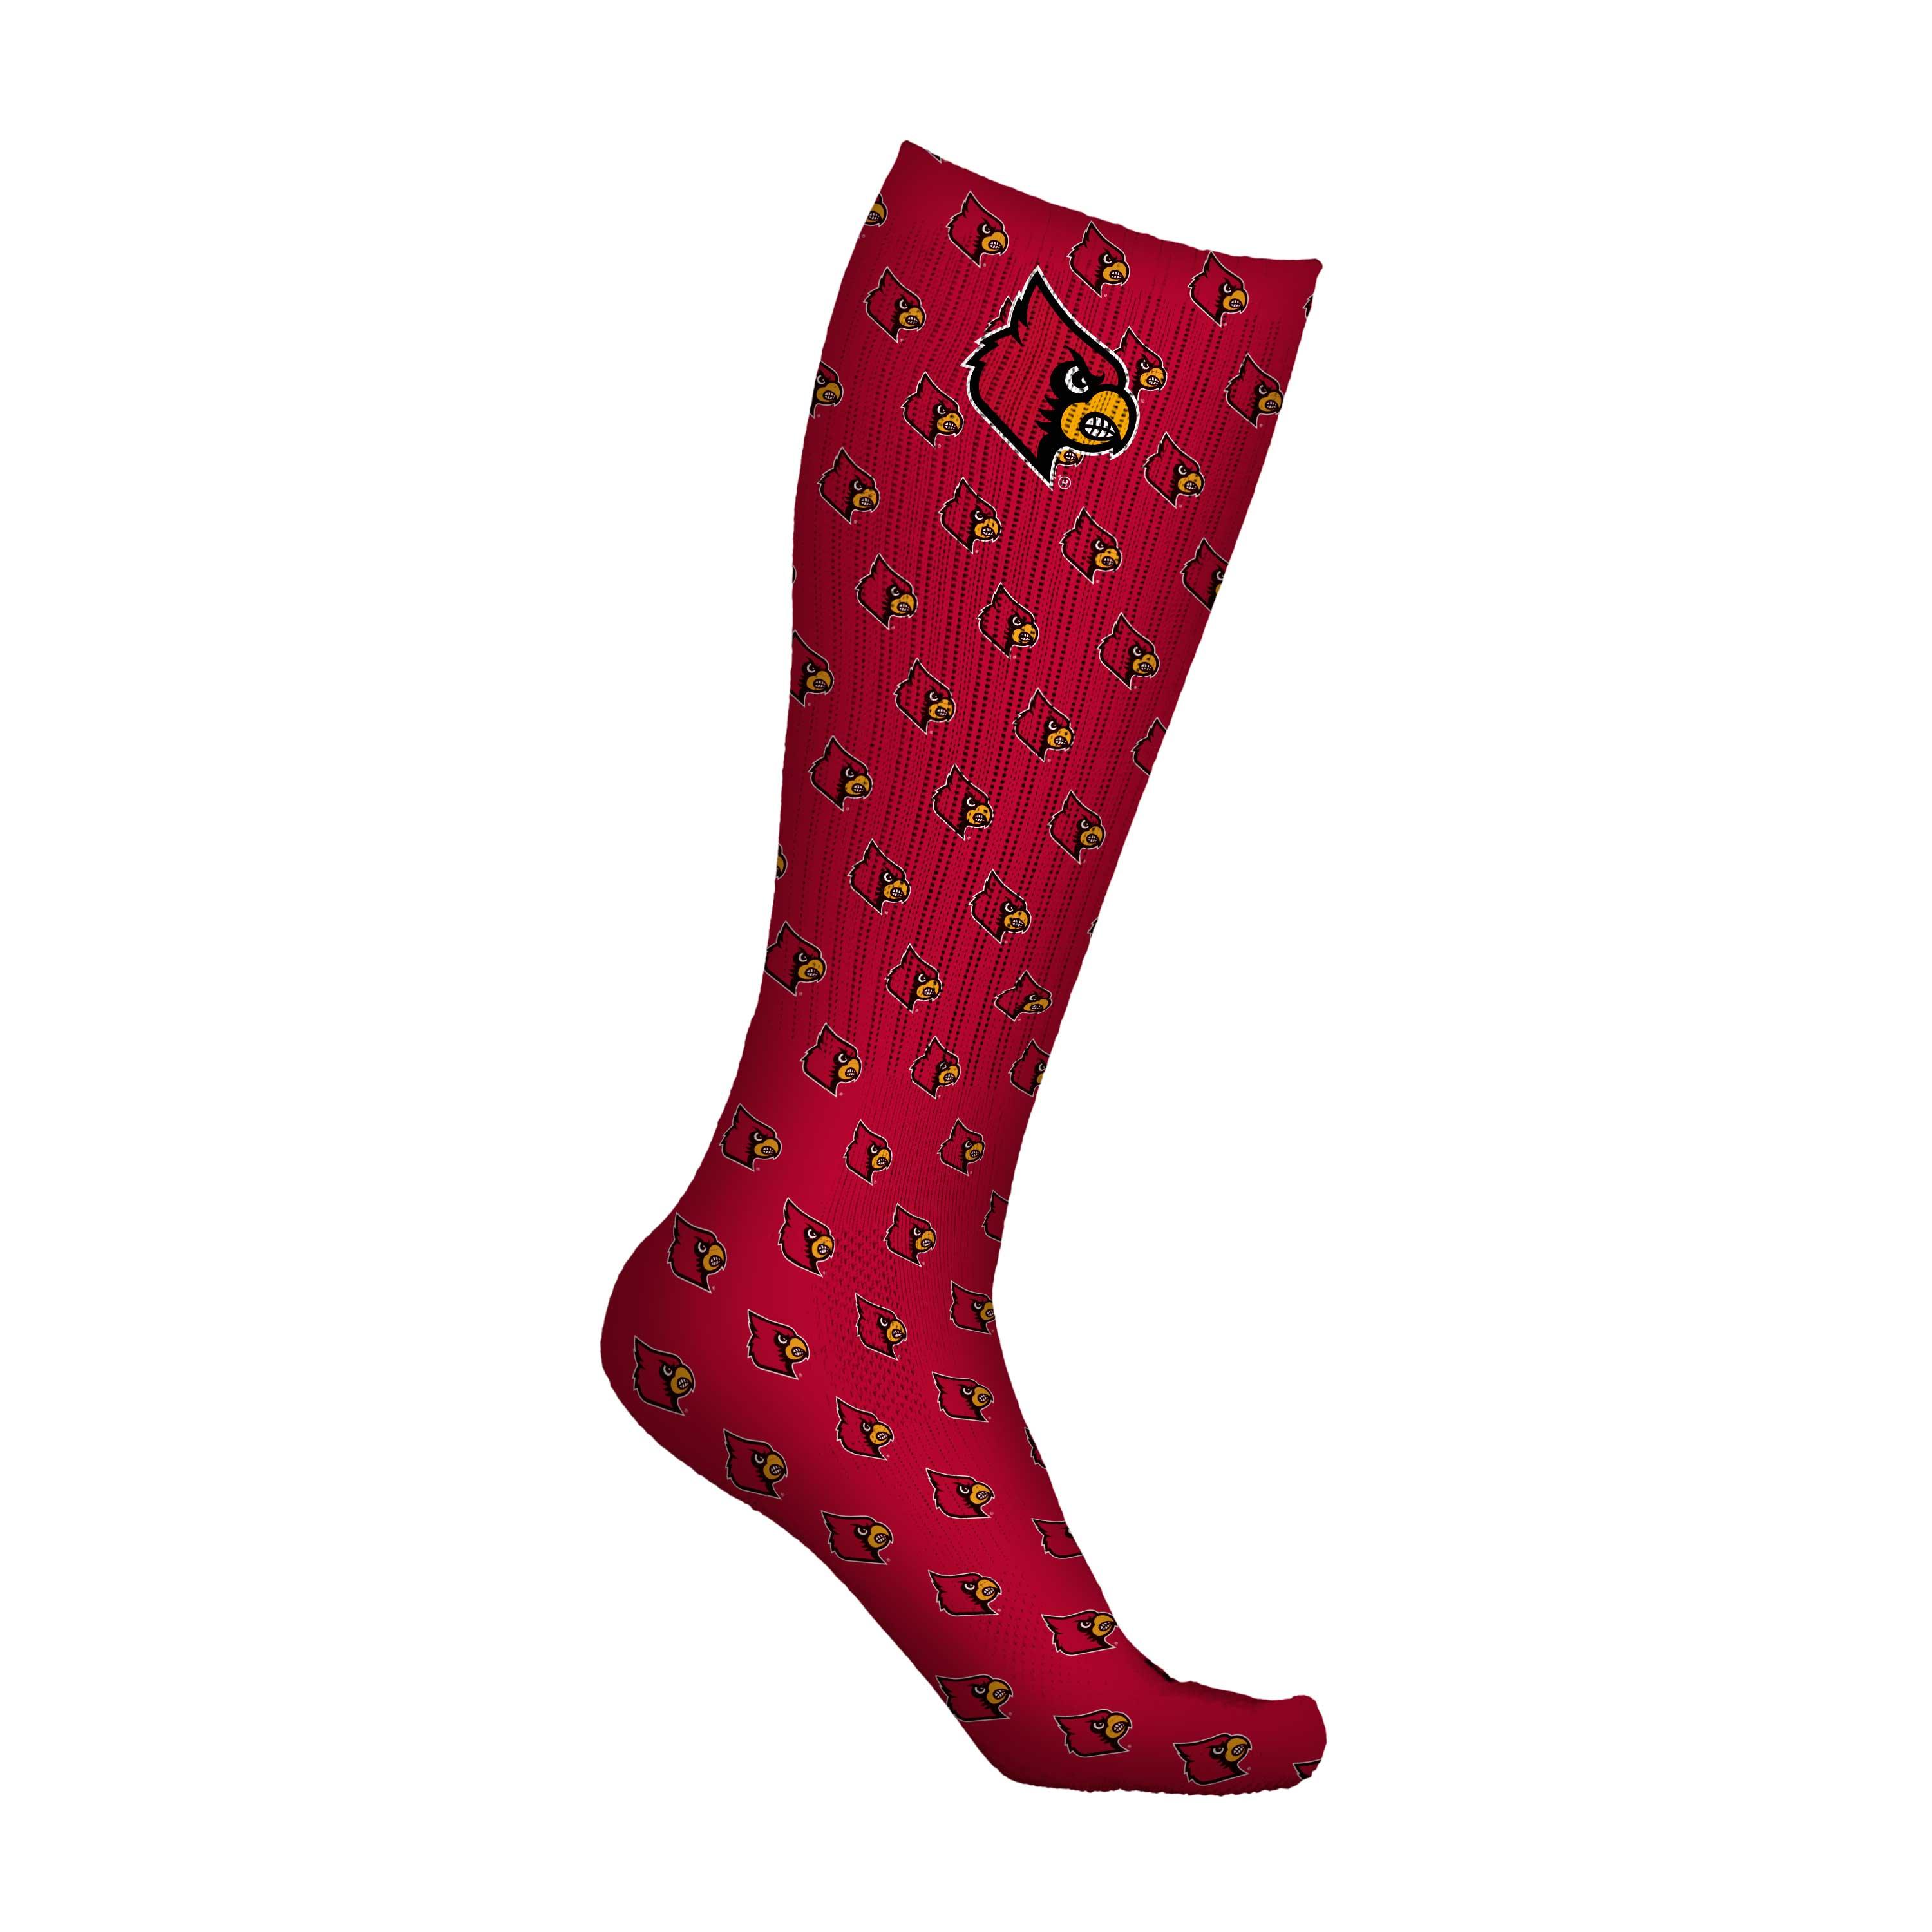 Louisville Cardinals Socks Wallpaper Red Design pair one size